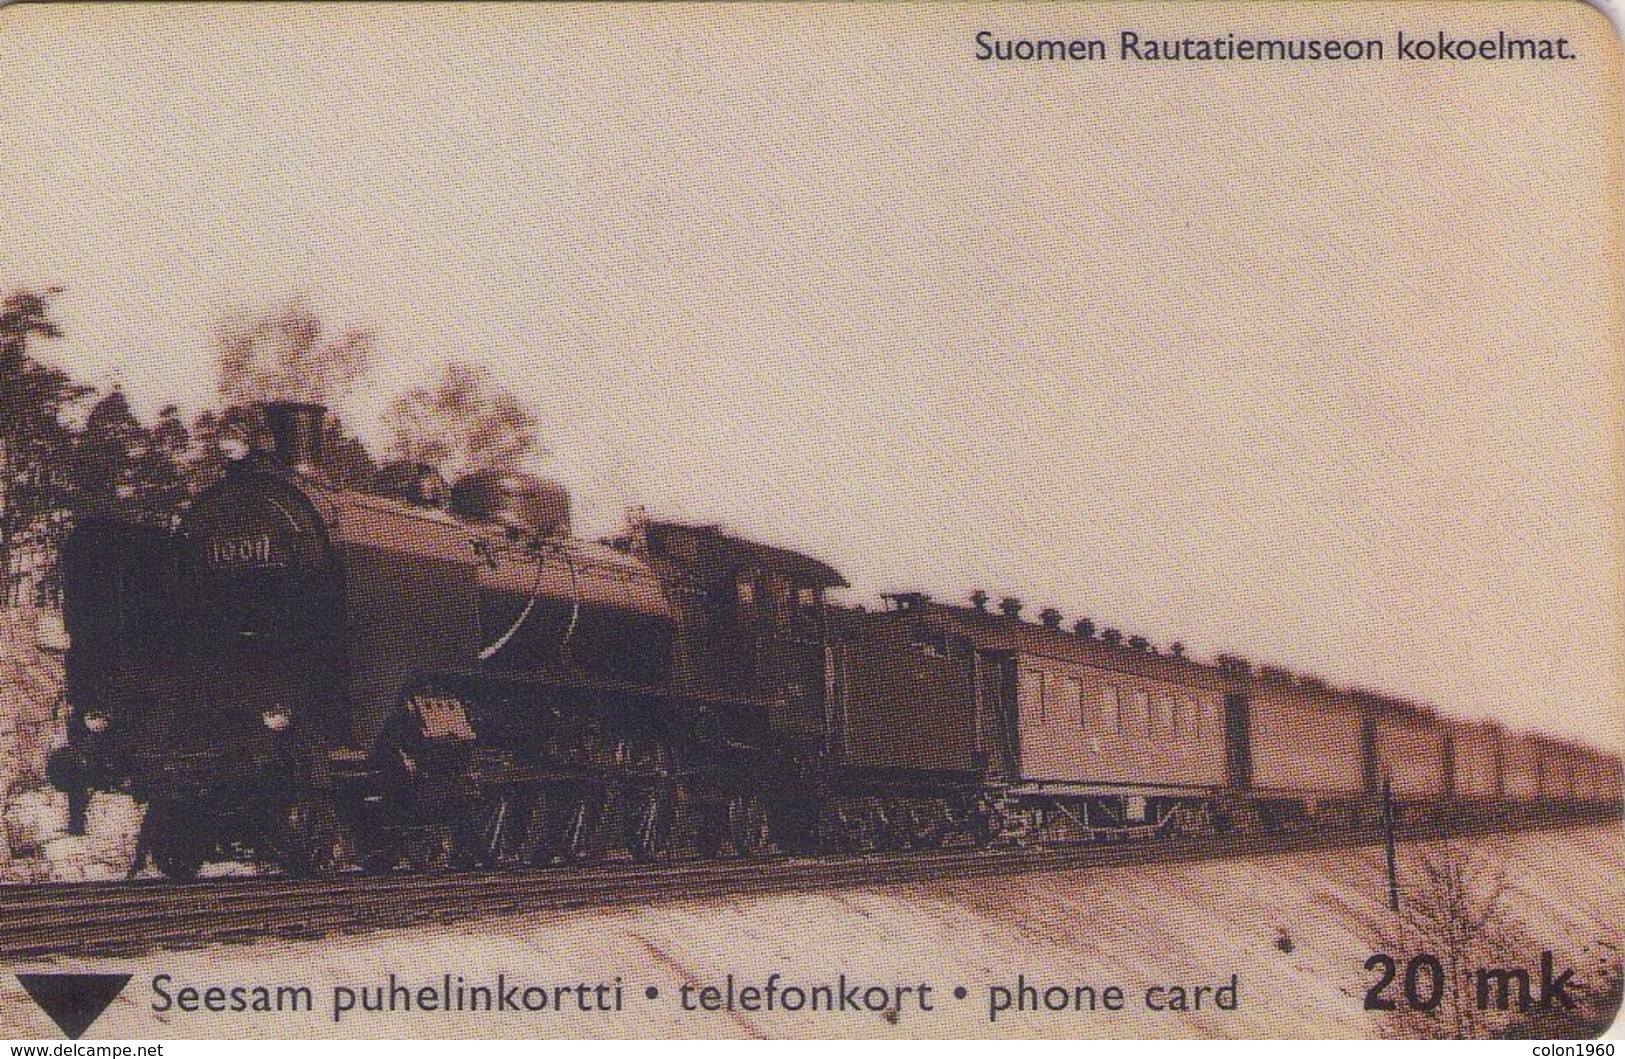 FINLANDIA. TTL-D-377E. TRENES, OLD TRAIN. 06.01 - 2020. 4250 Ex. (039). - Trains